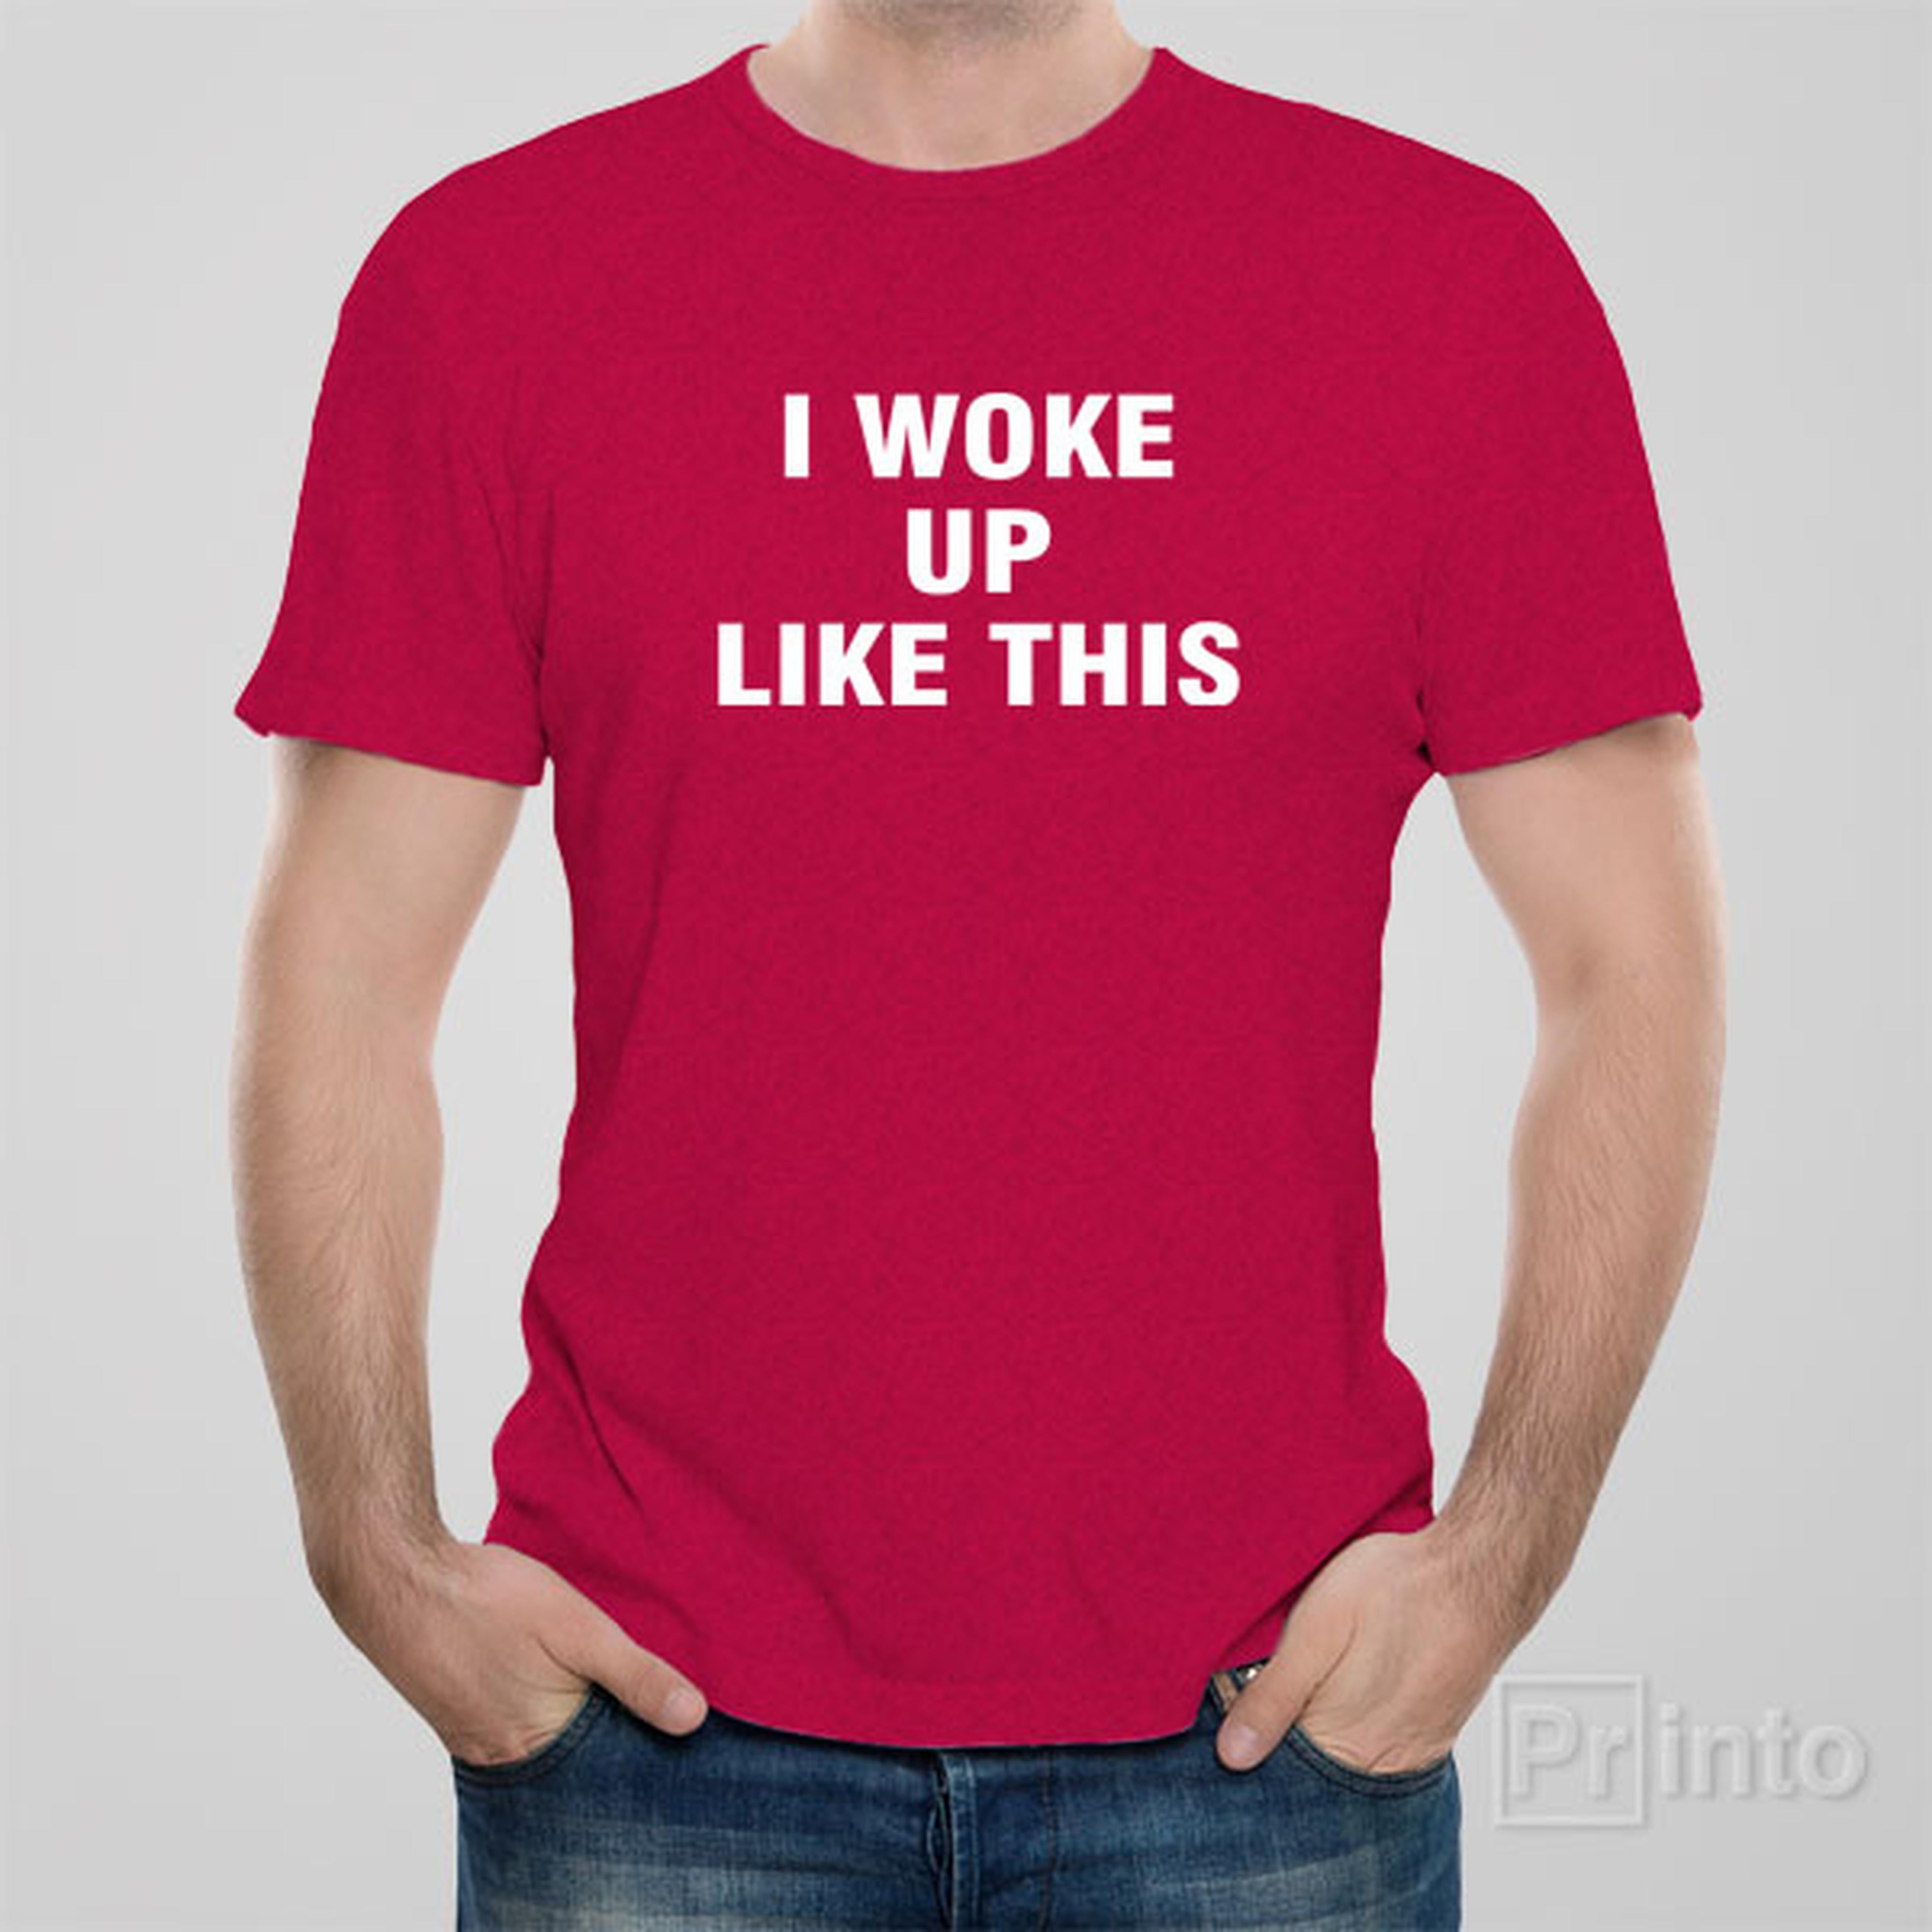 i-woke-up-like-this-t-shirt